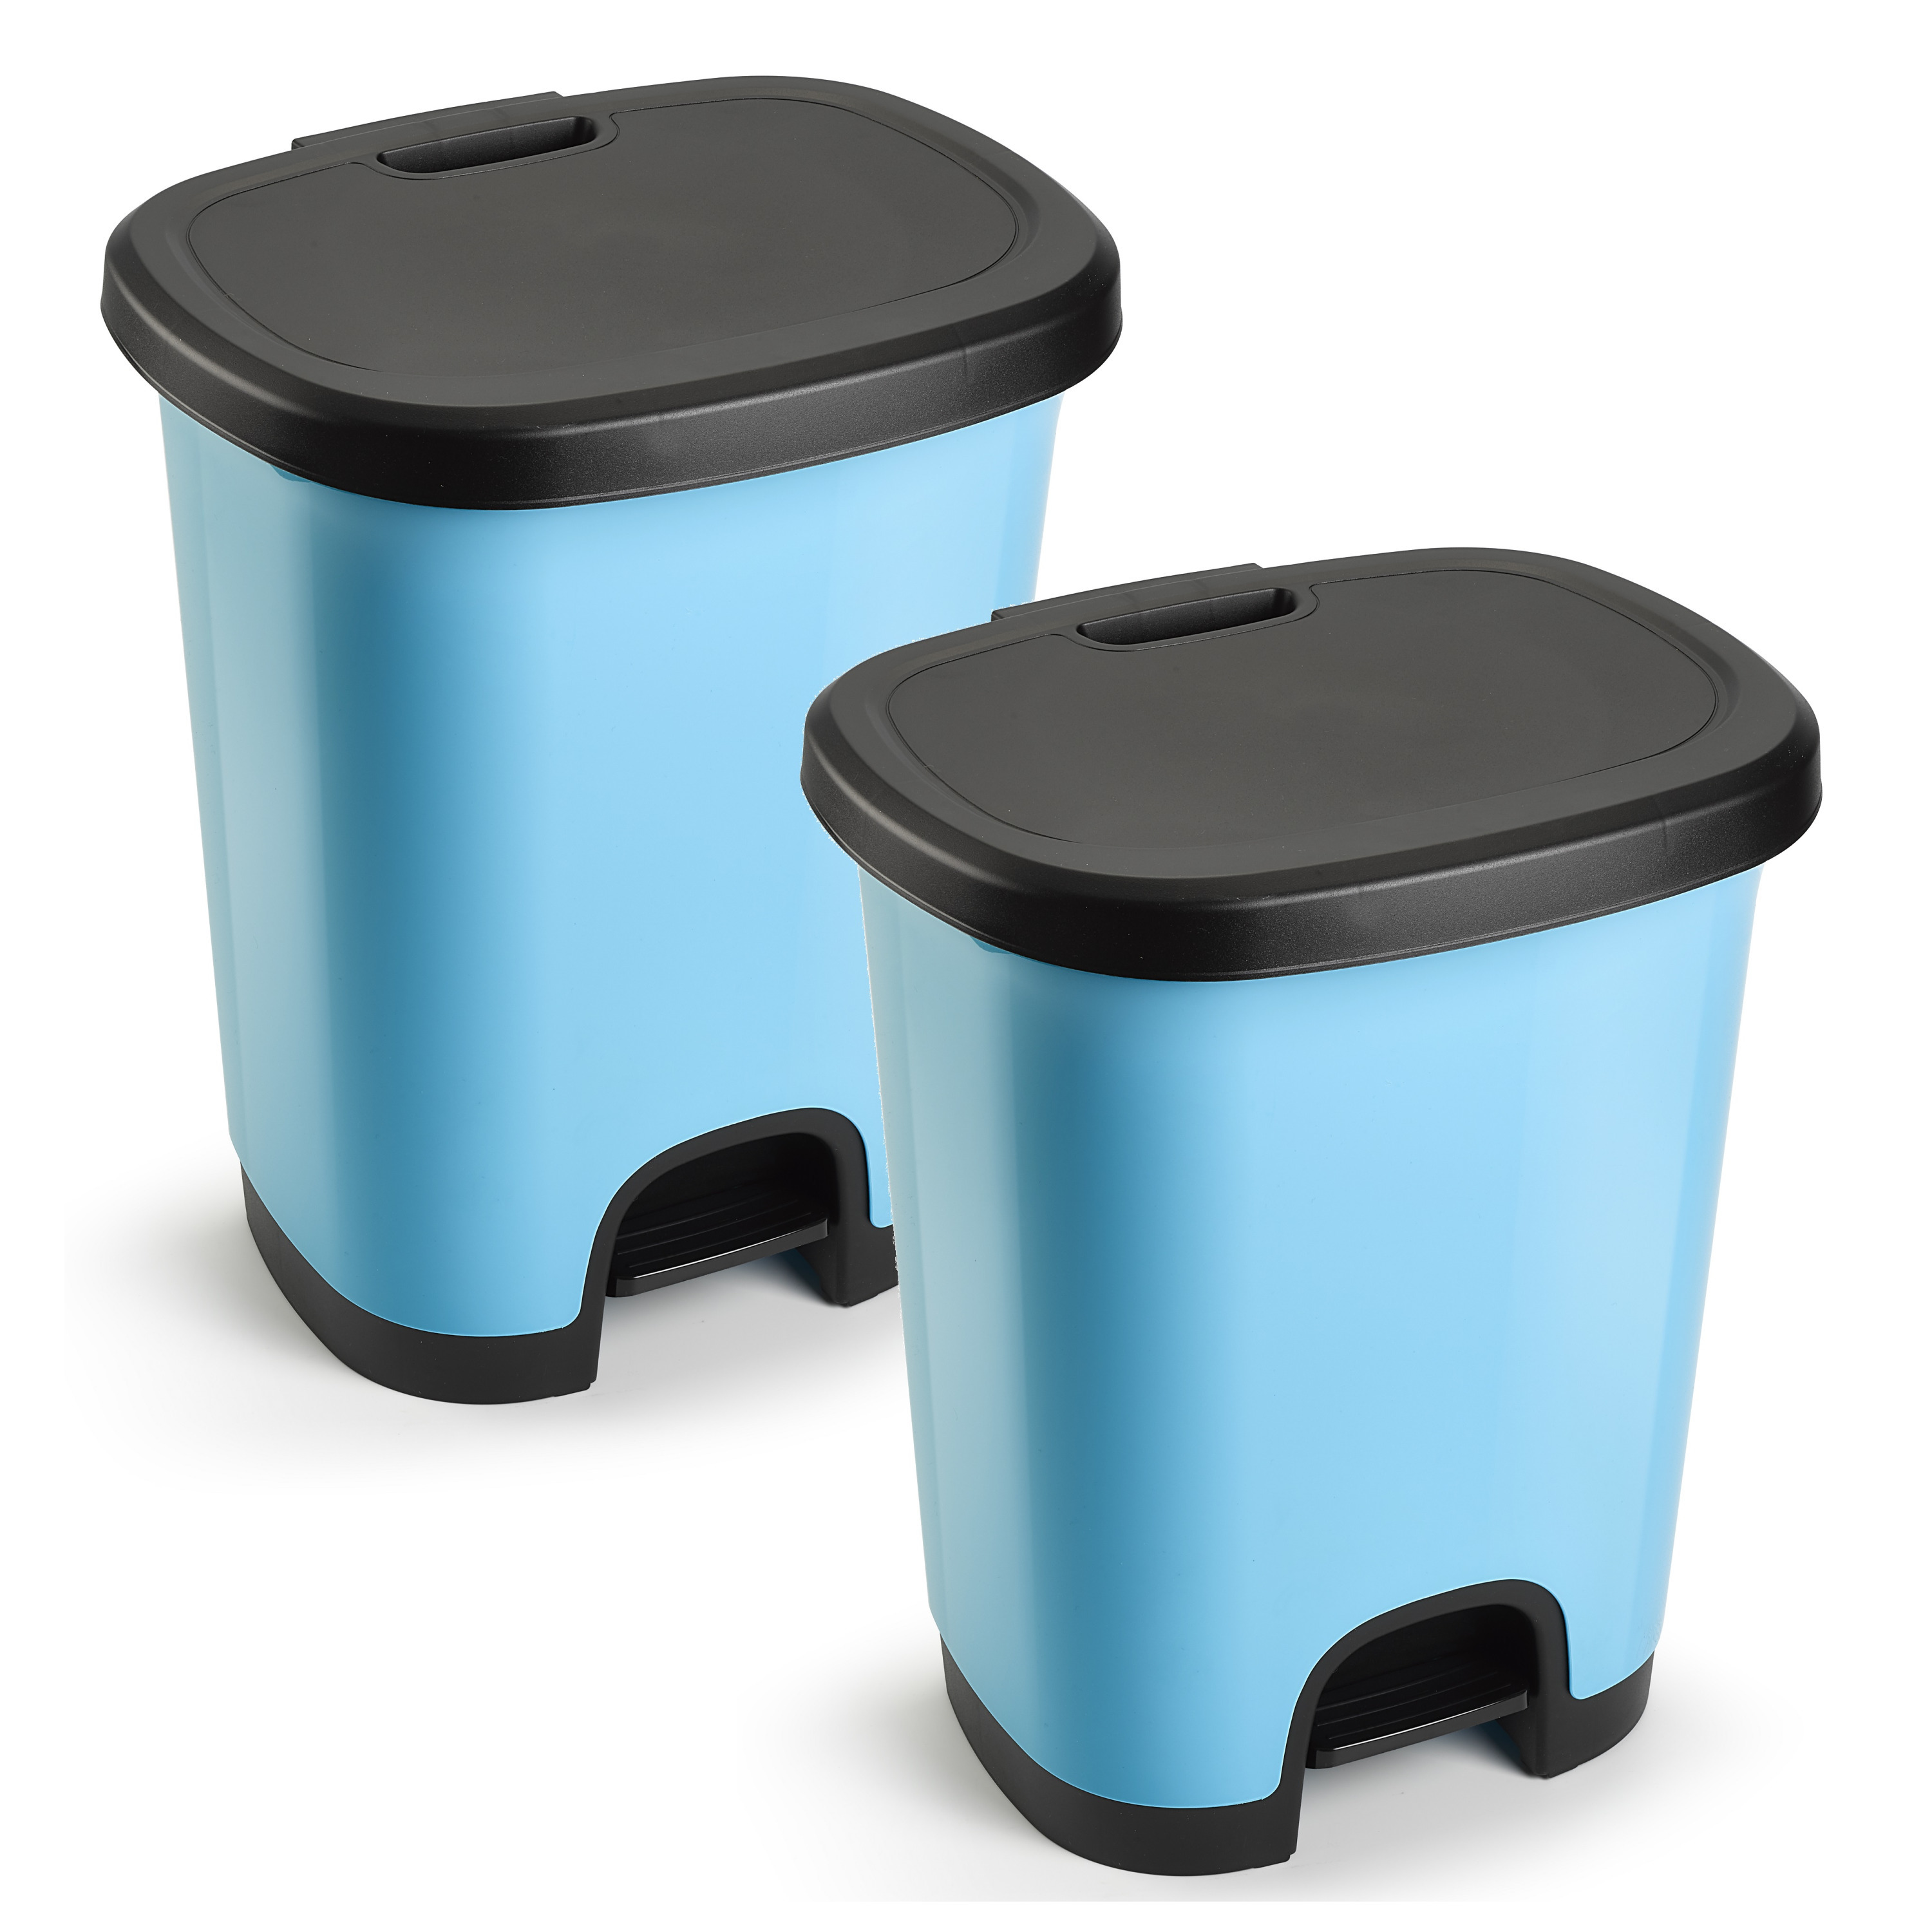 2x Stuks afvalemmer-vuilnisemmer-pedaalemmer 18 liter in het lichtblauw-zwart met deksel en pedaal